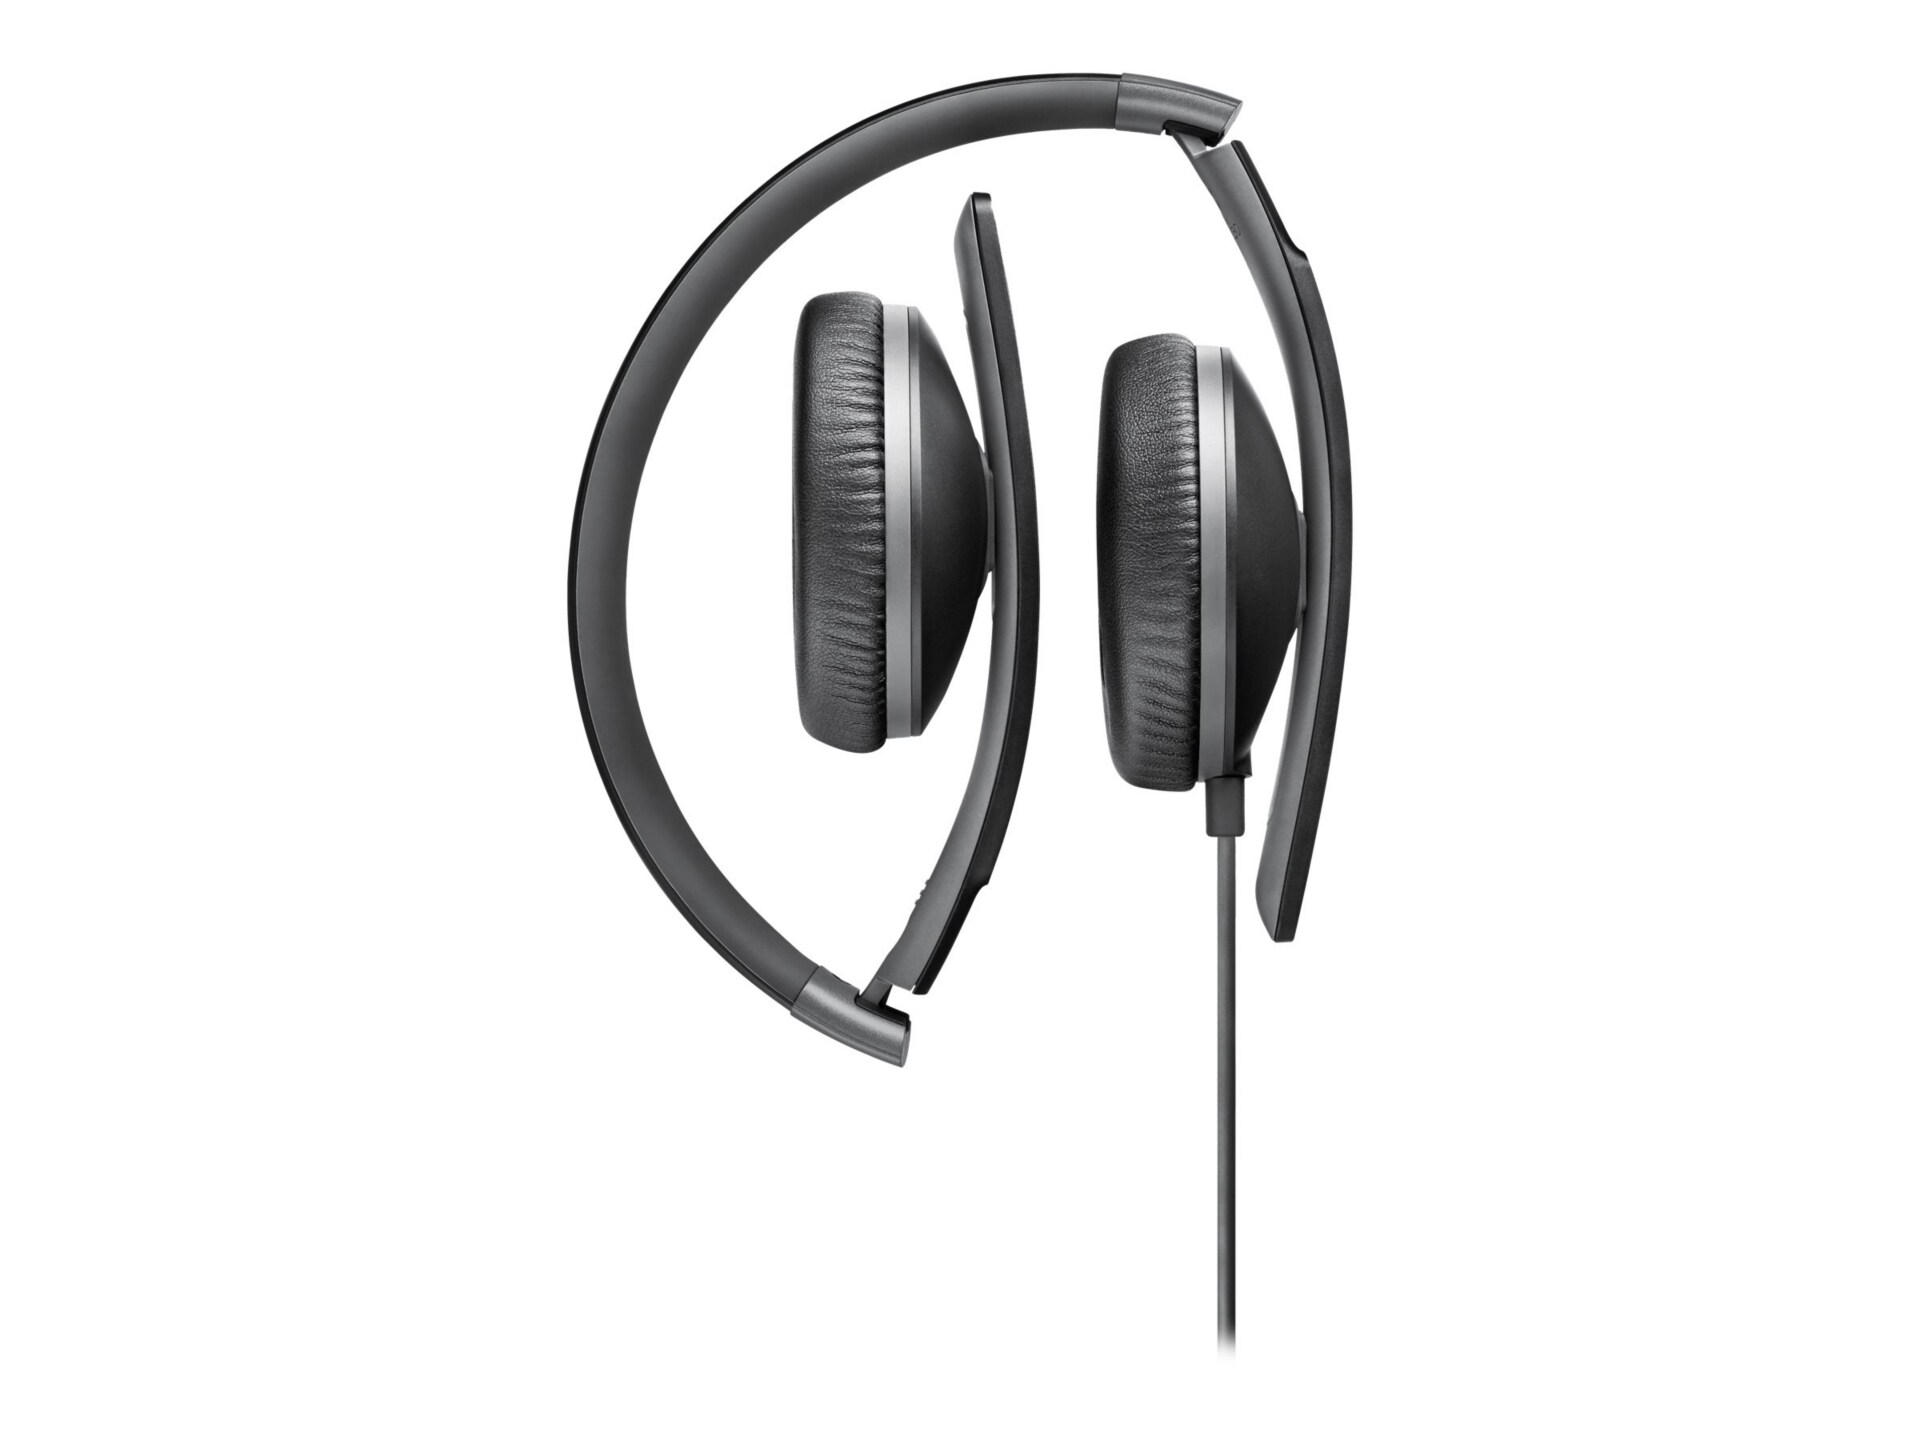 Sennheiser HD 2.30i - headphones with mic